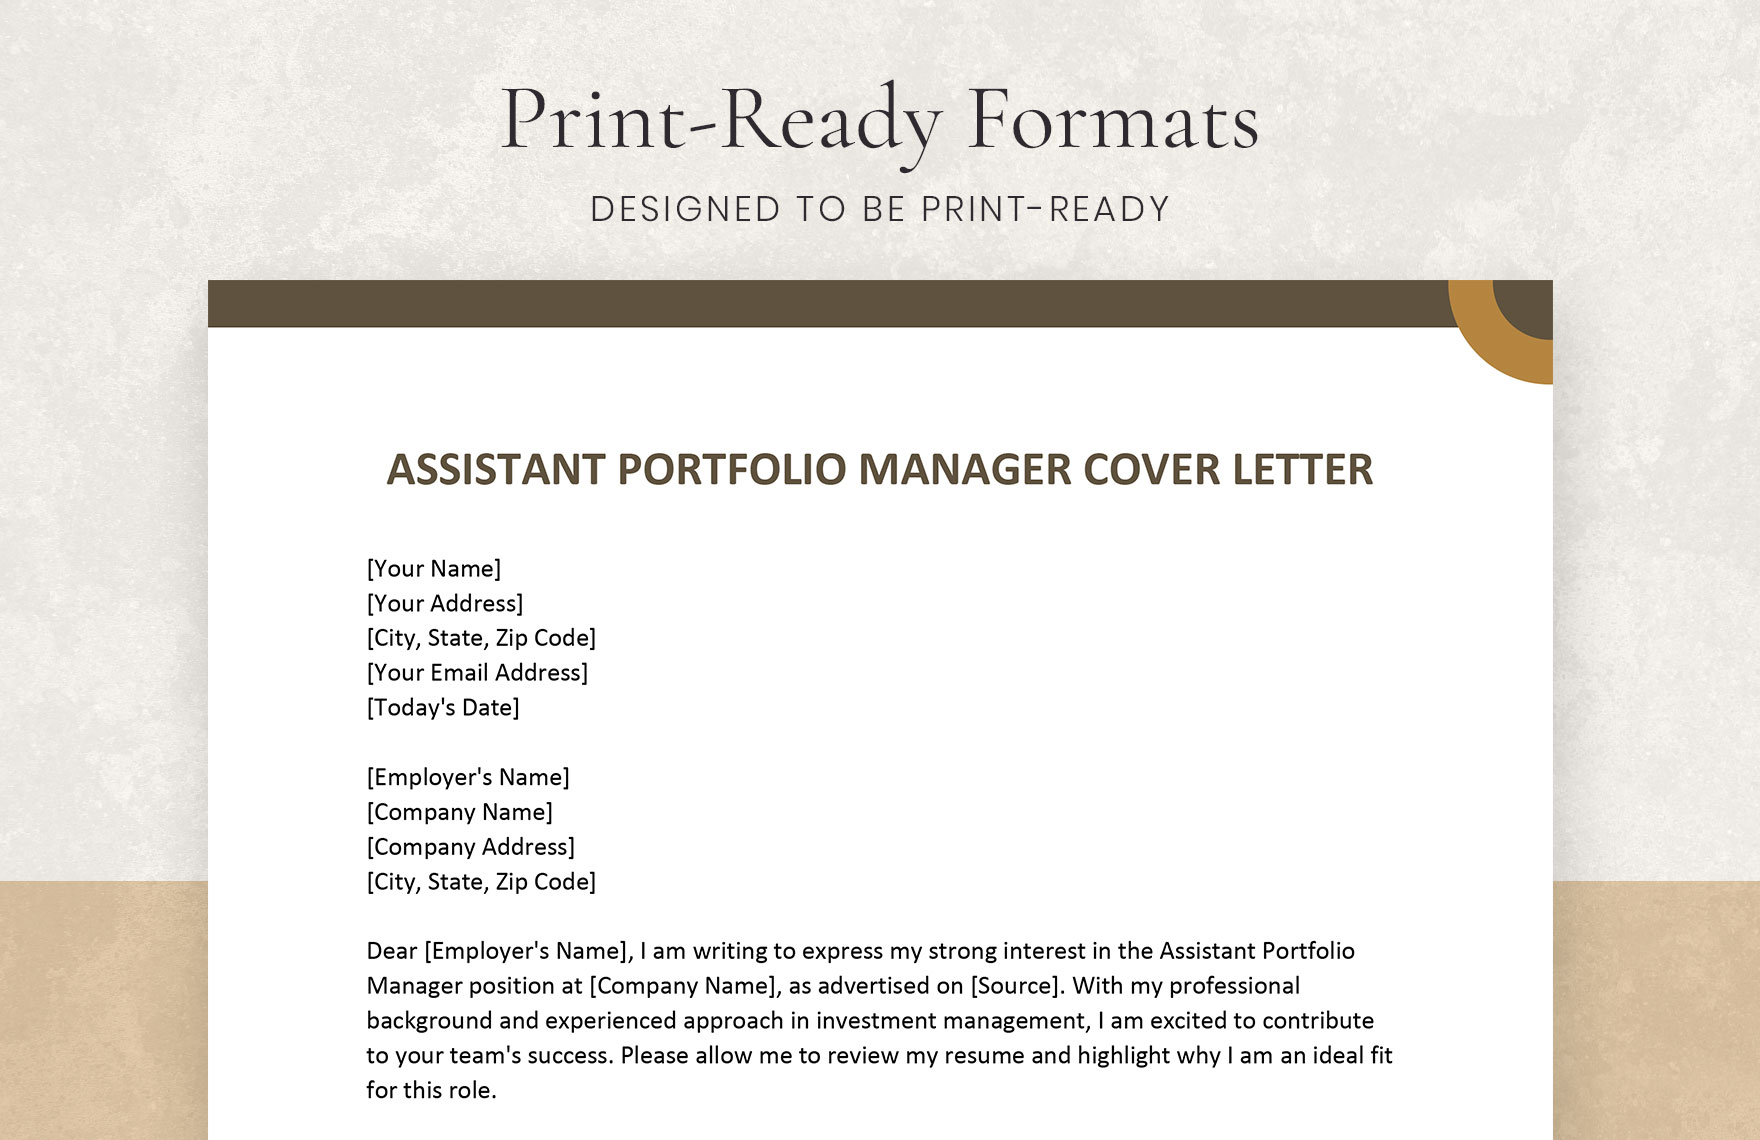 Assistant Portfolio Manager Cover Letter